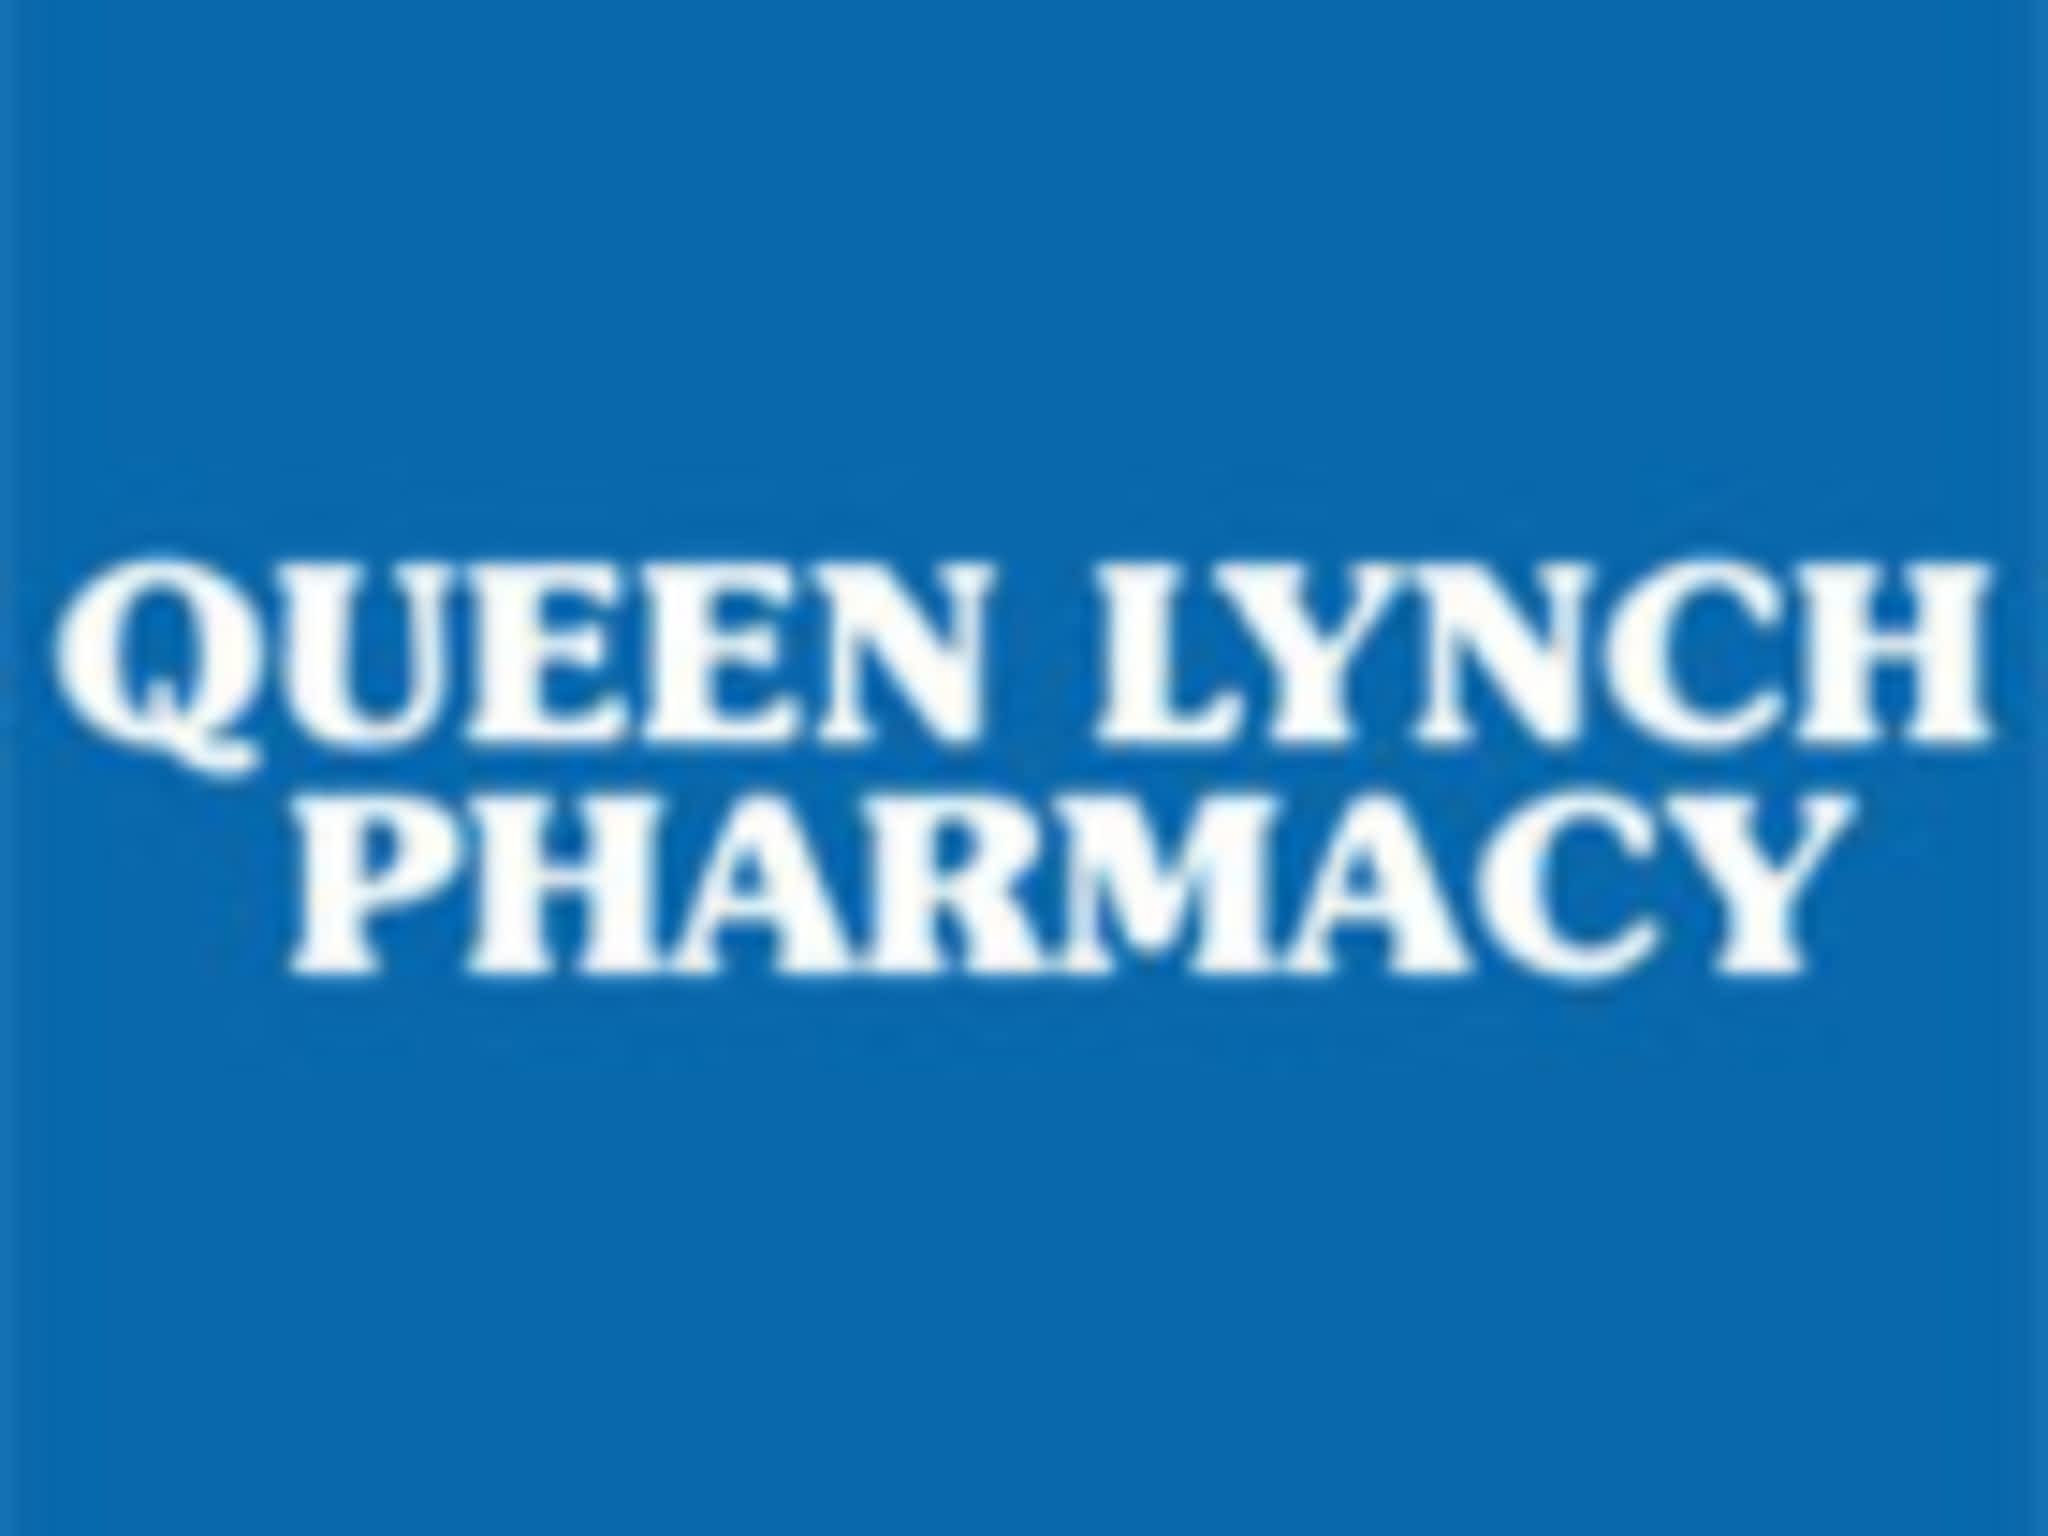 photo Queen Lynch Pharmacy